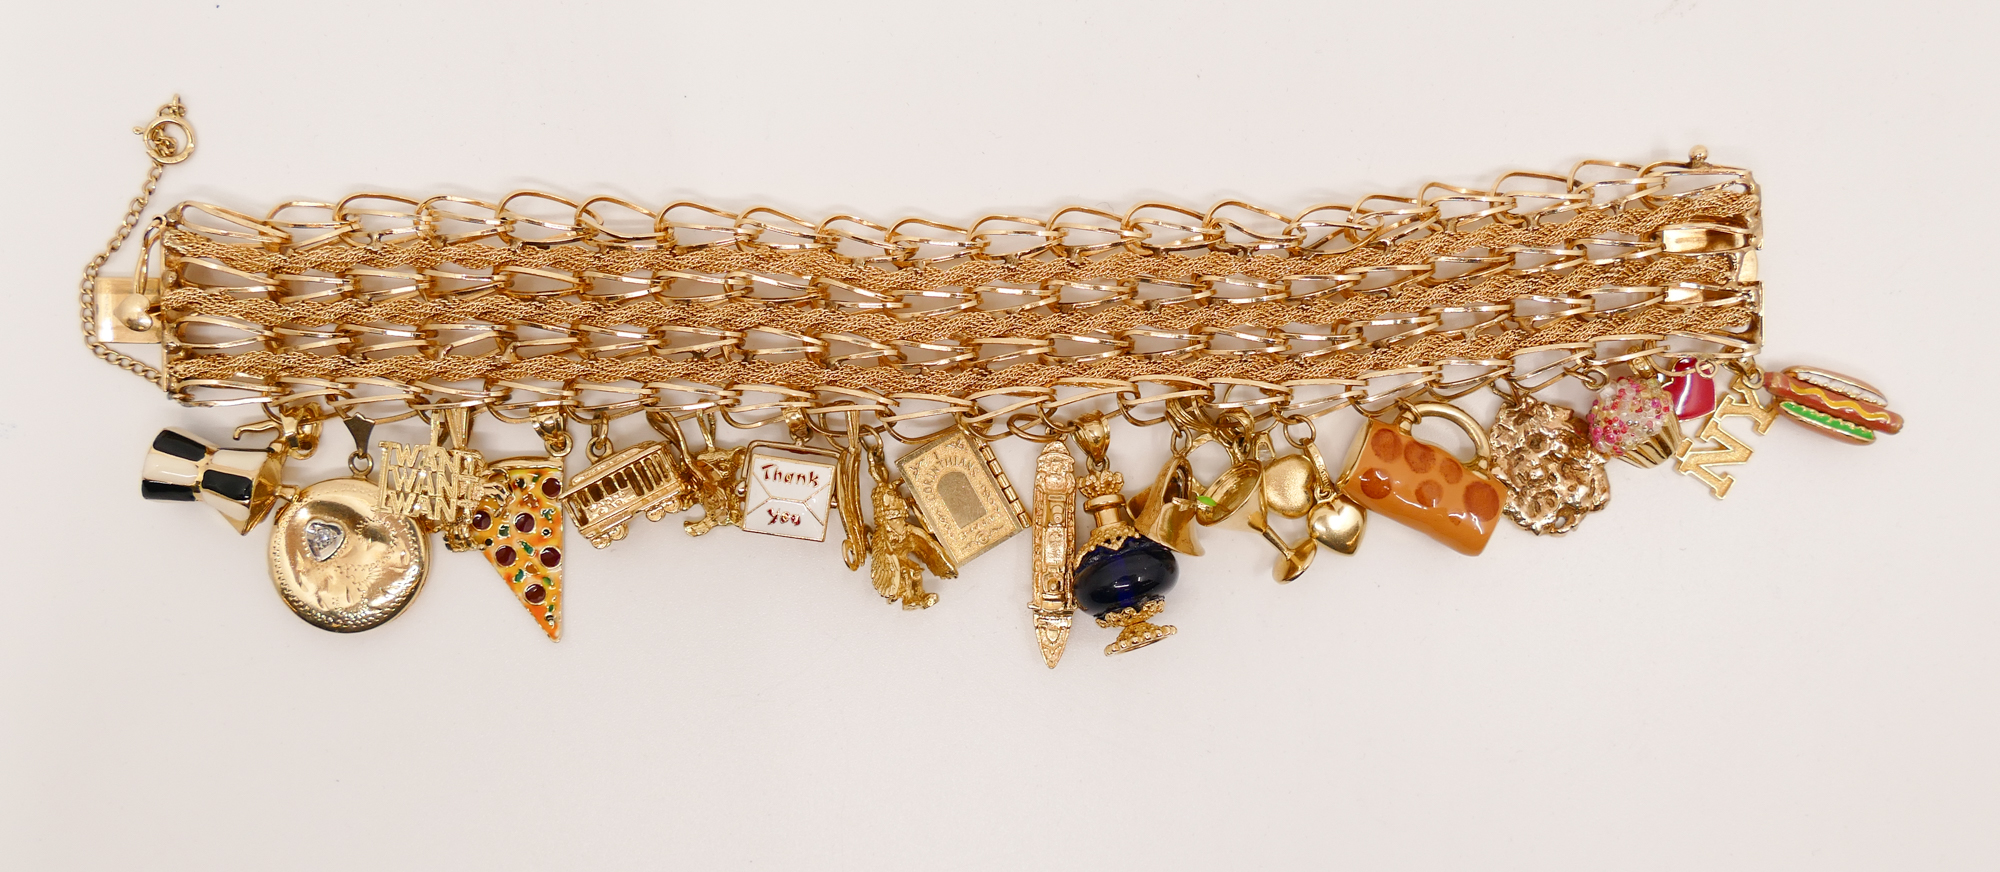 14K Gold Bracelet with Charms  2b027e